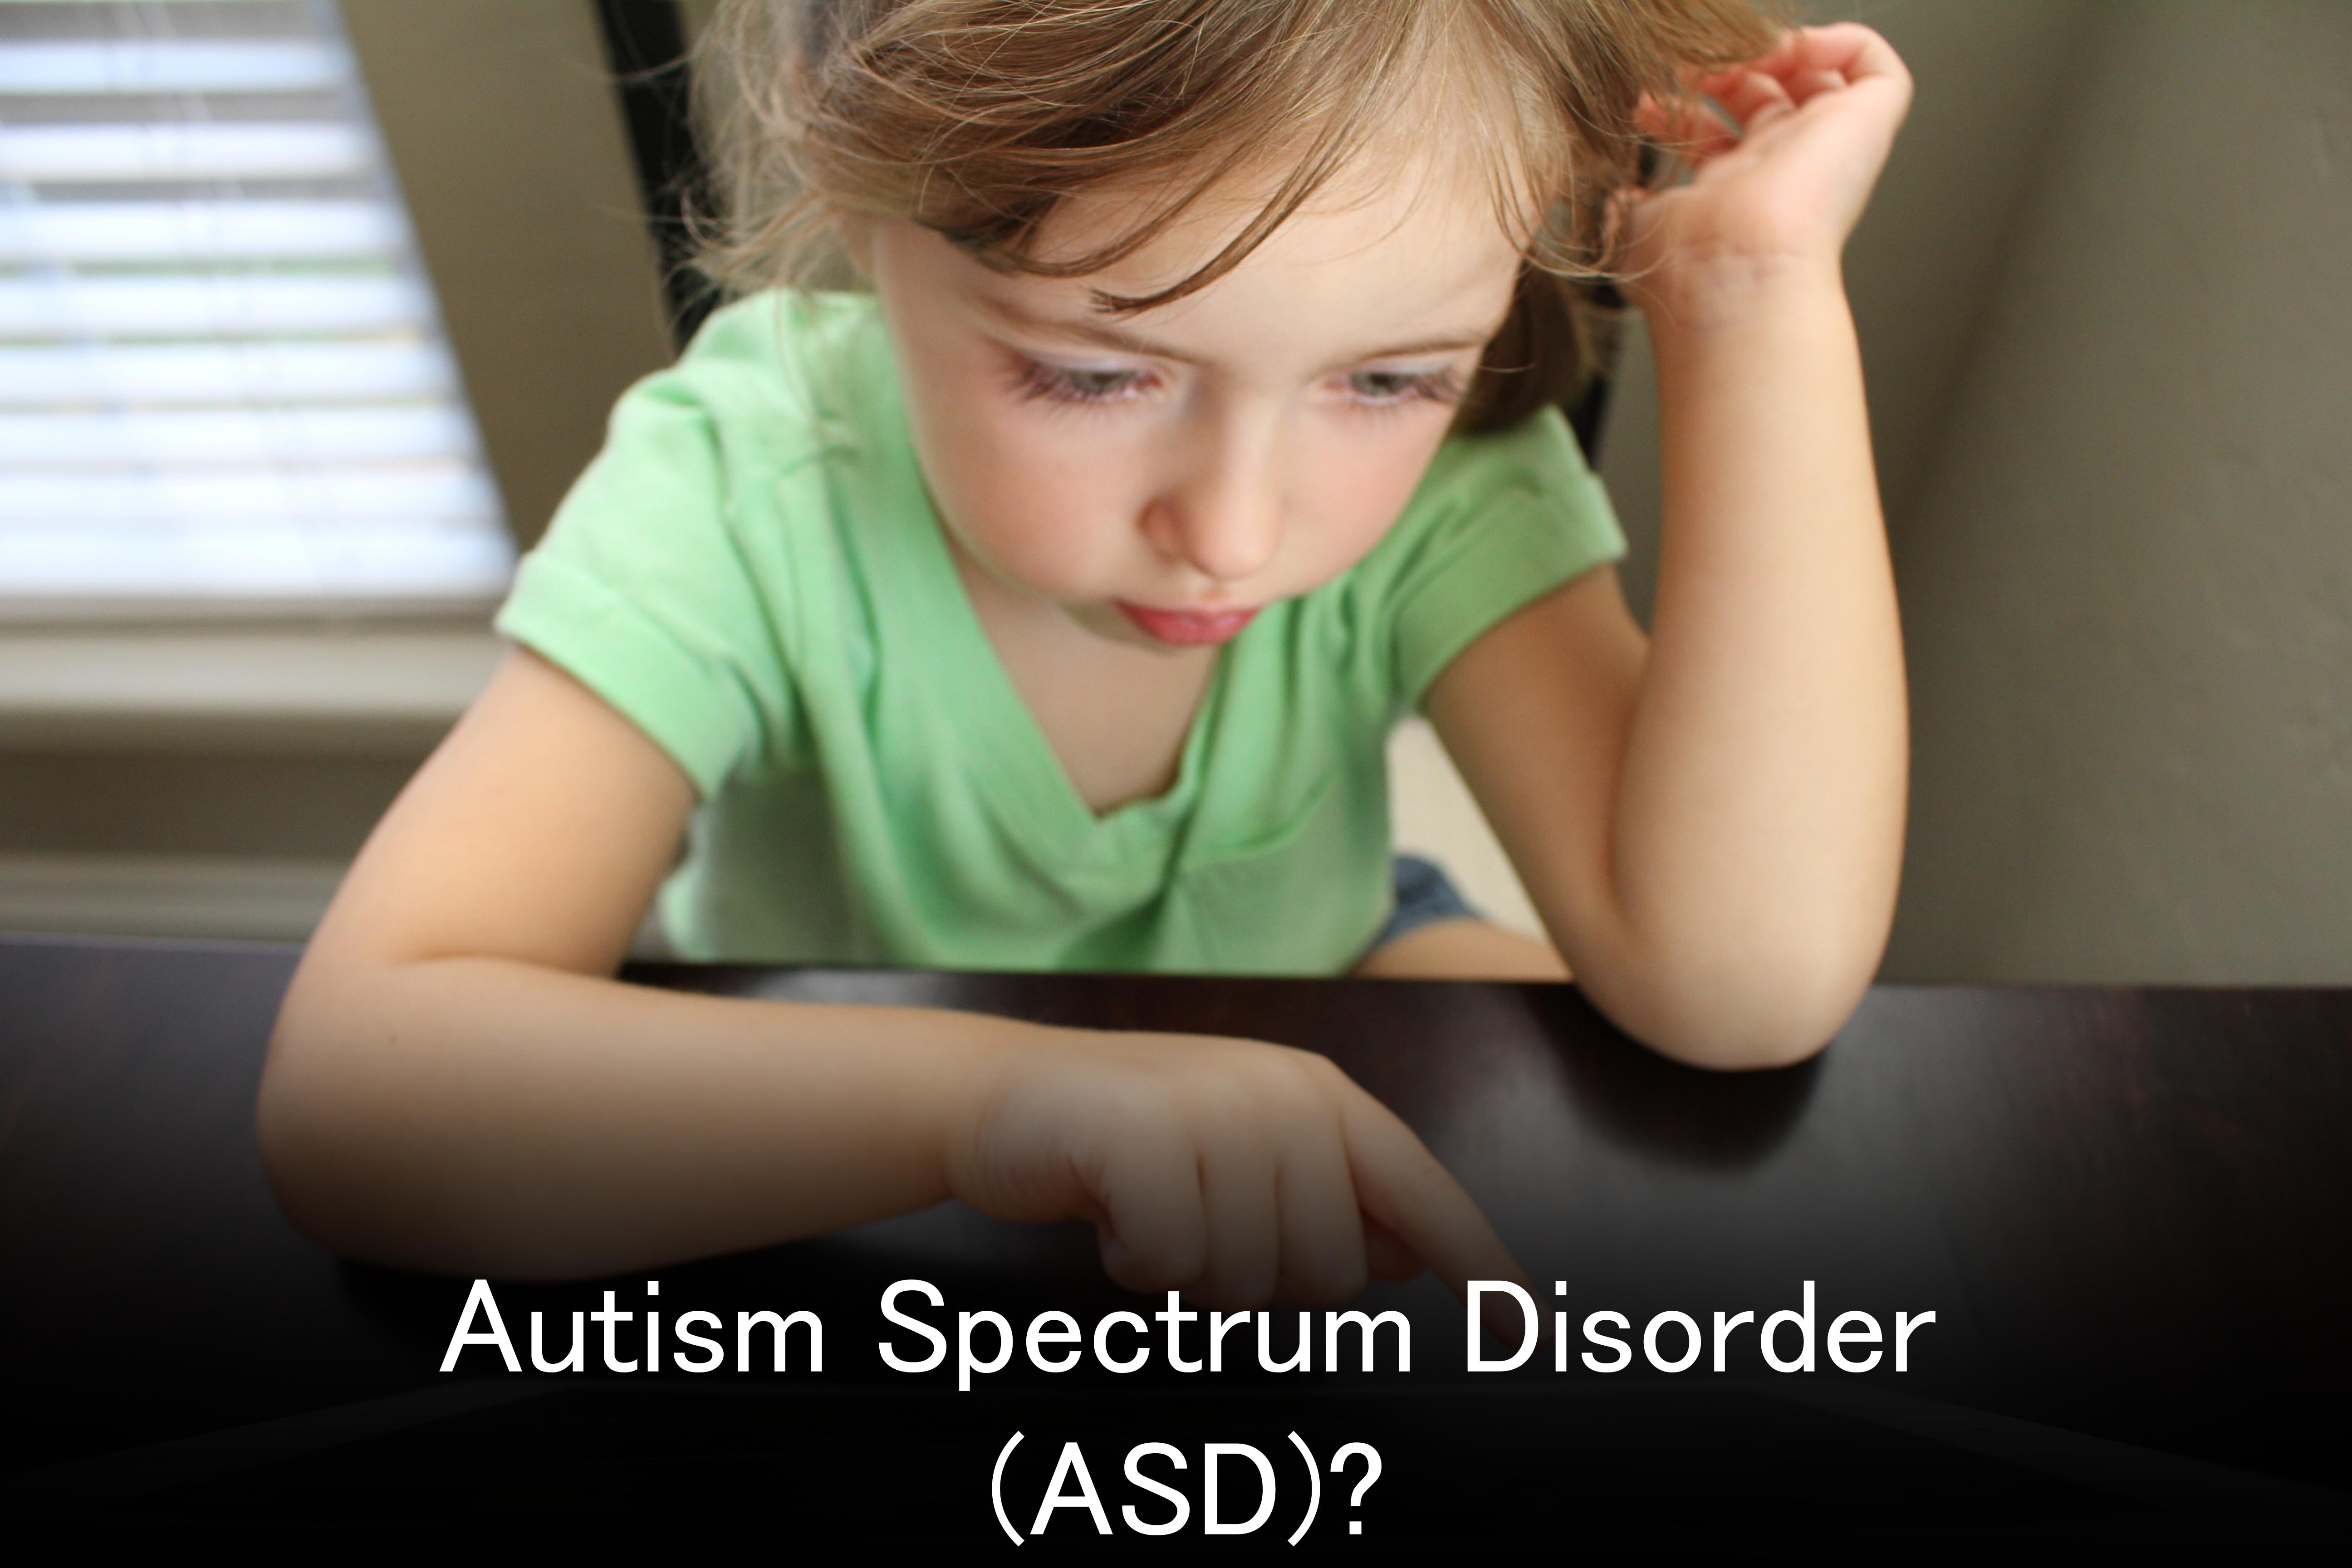 tests used to determine autism spectrum disorder